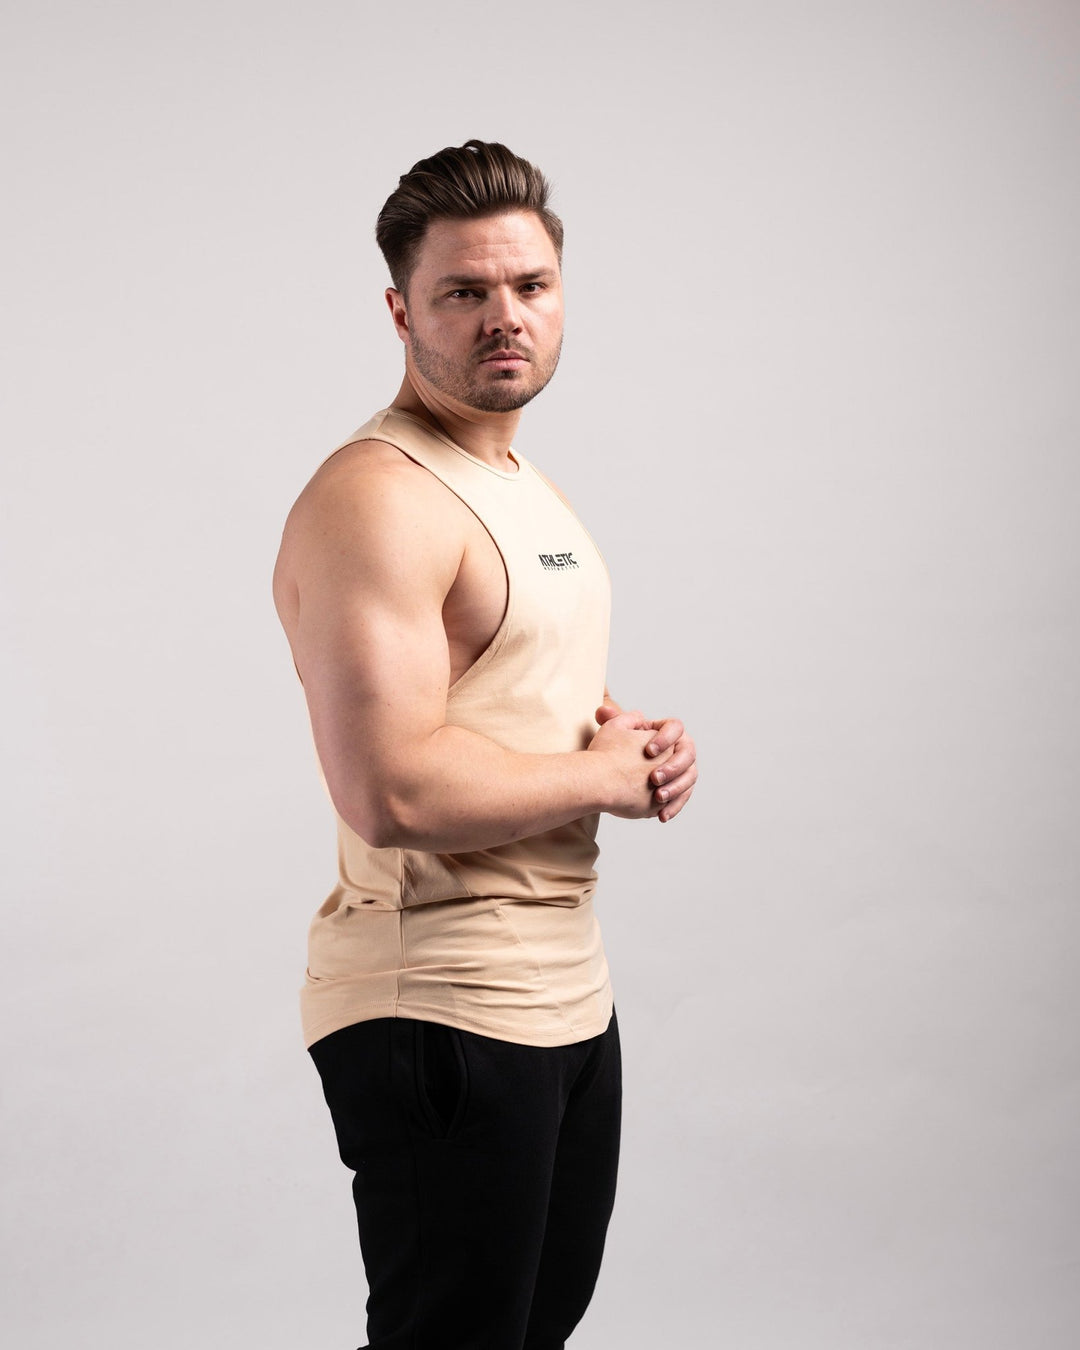 Infinity Sleeveless Shirt (Tan) - Athletic Aesthetics